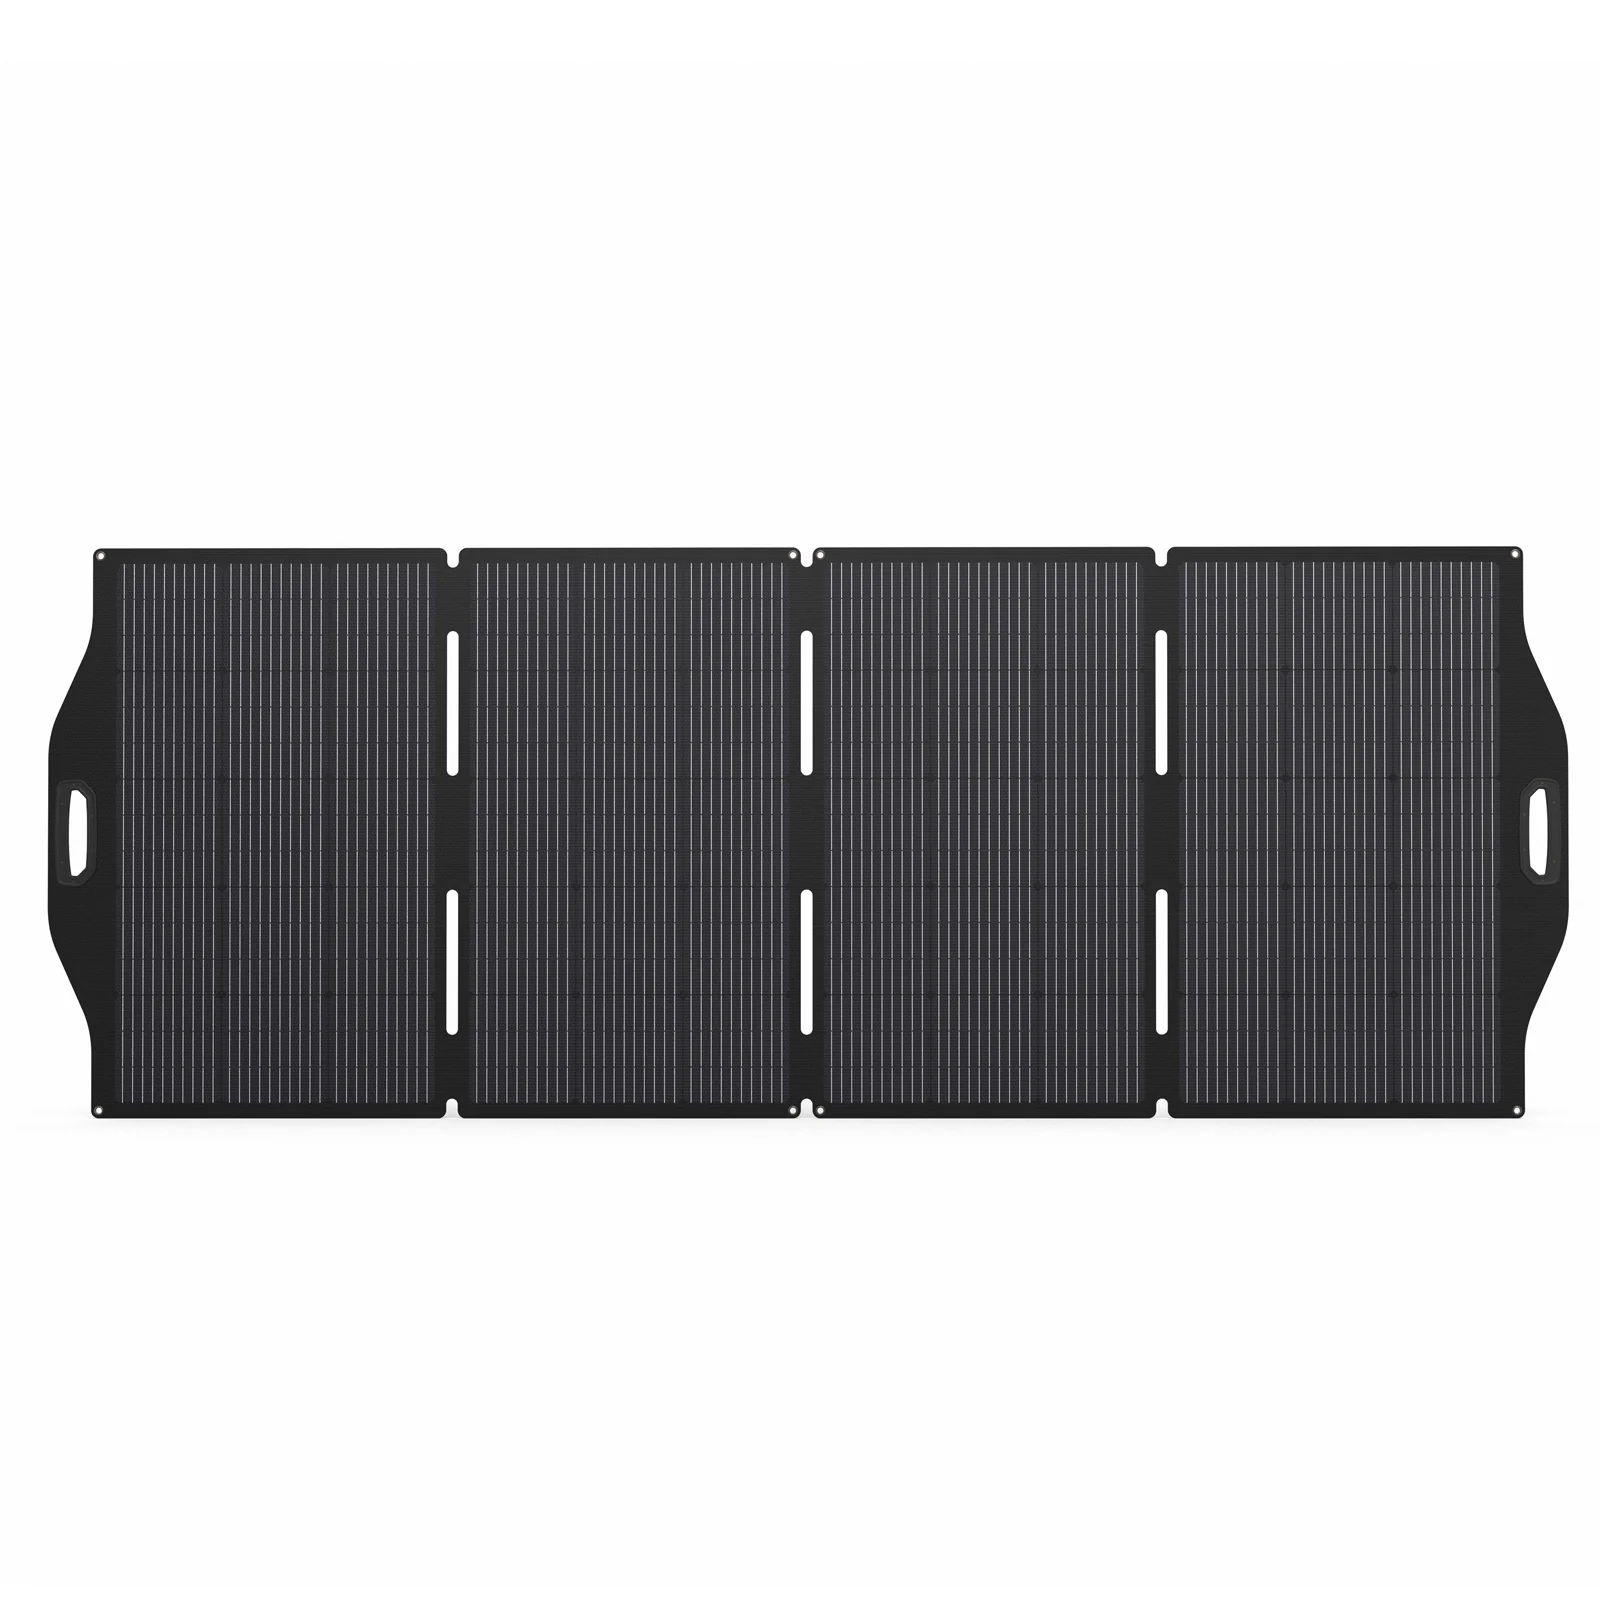 BigBlue SolarPowa 400 Portable ETFE Solar Panel 400W 51.3V 7.8A B1004V New